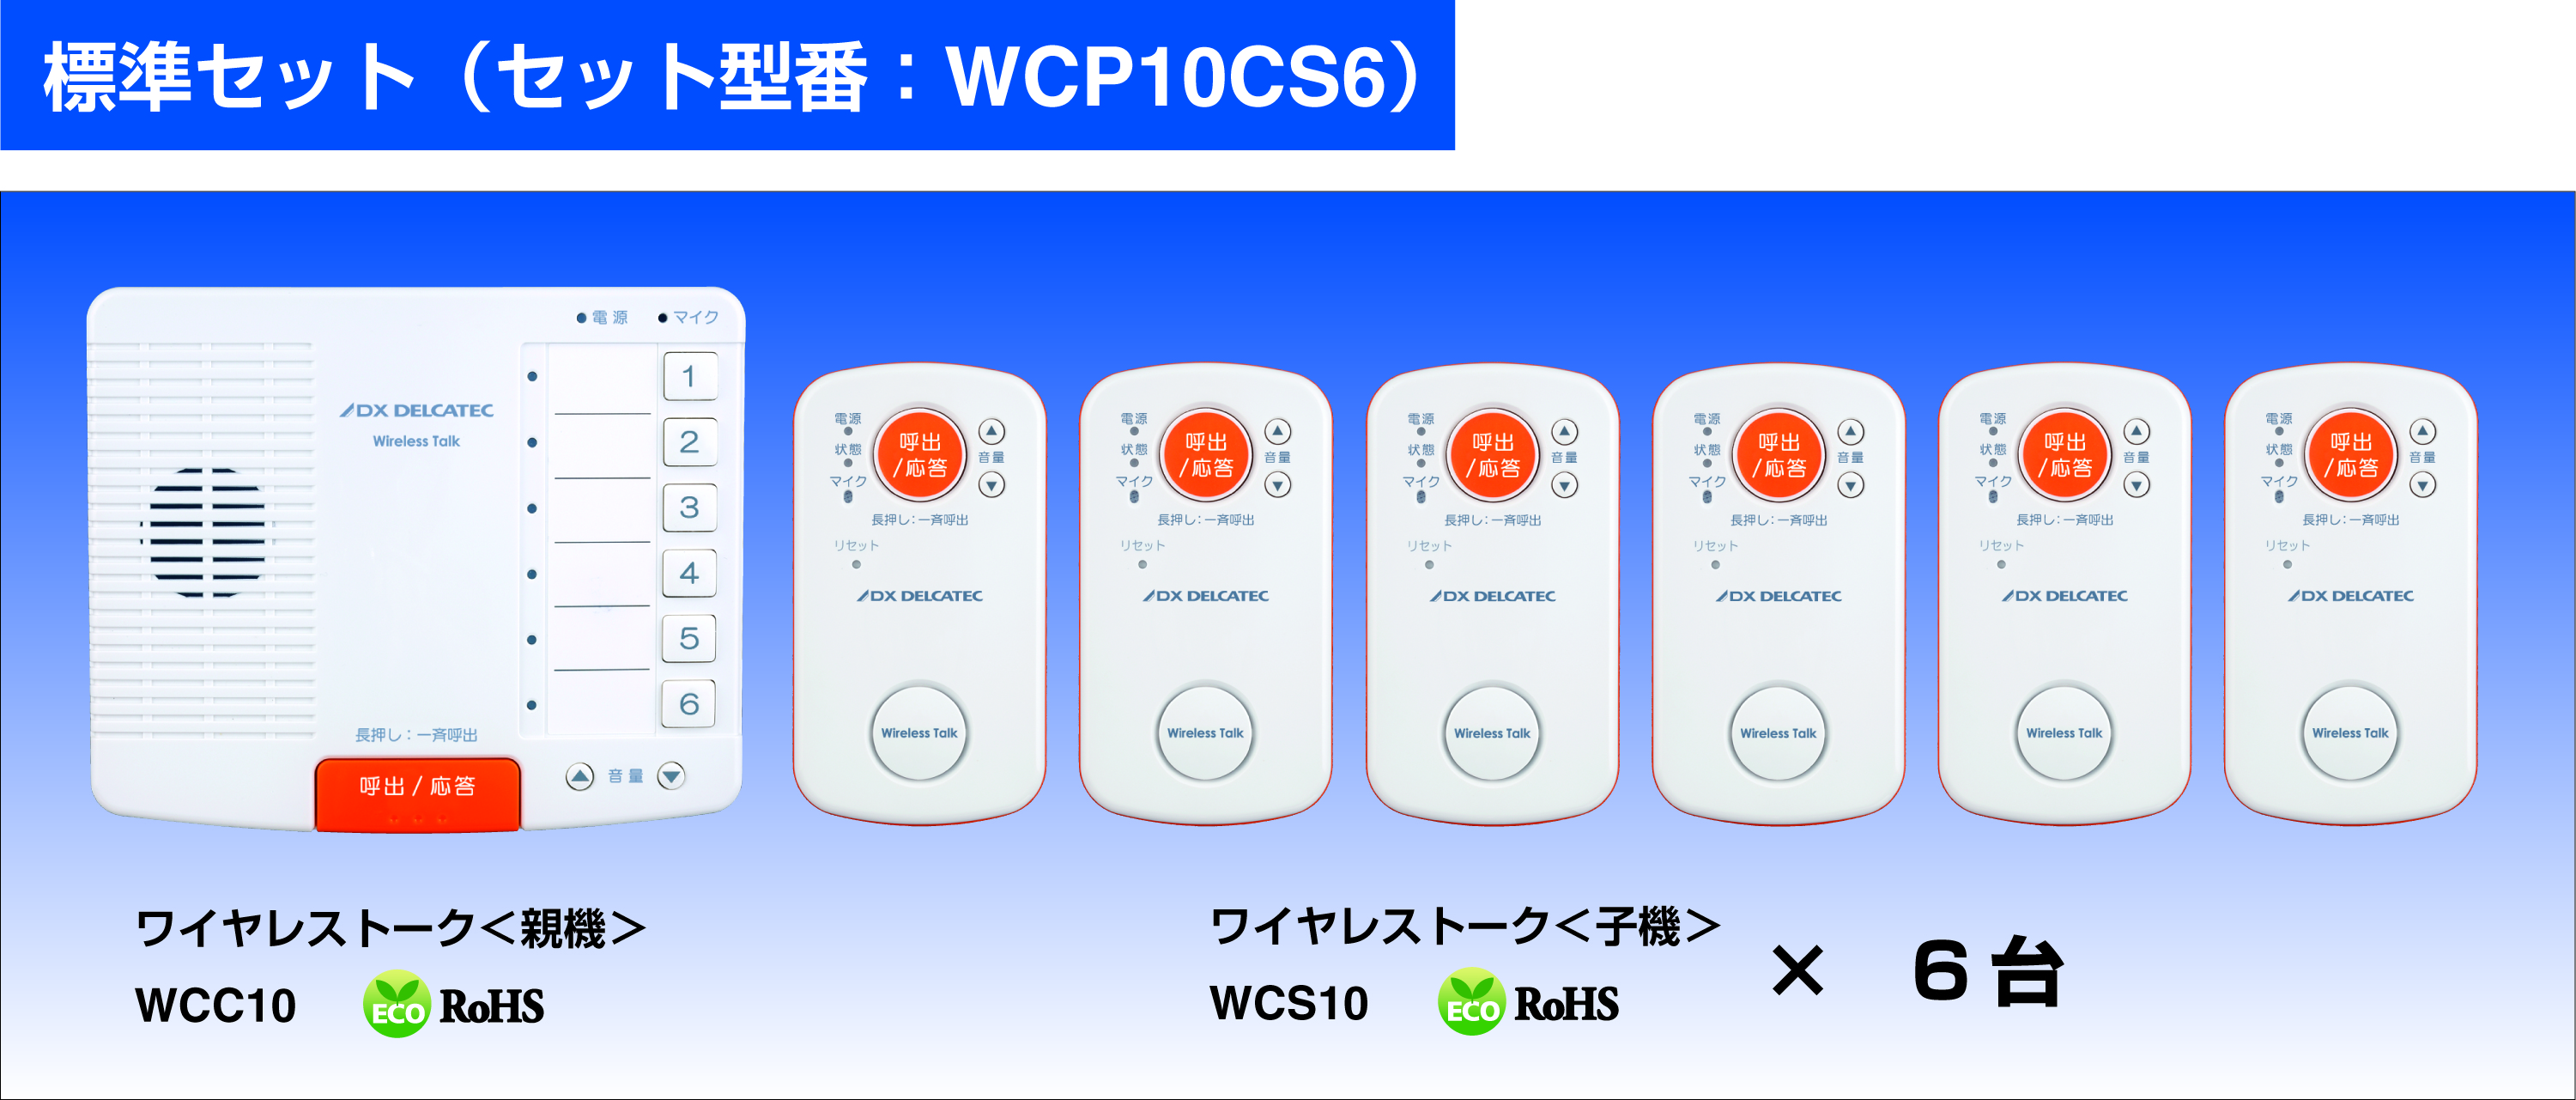 WCP10CS6